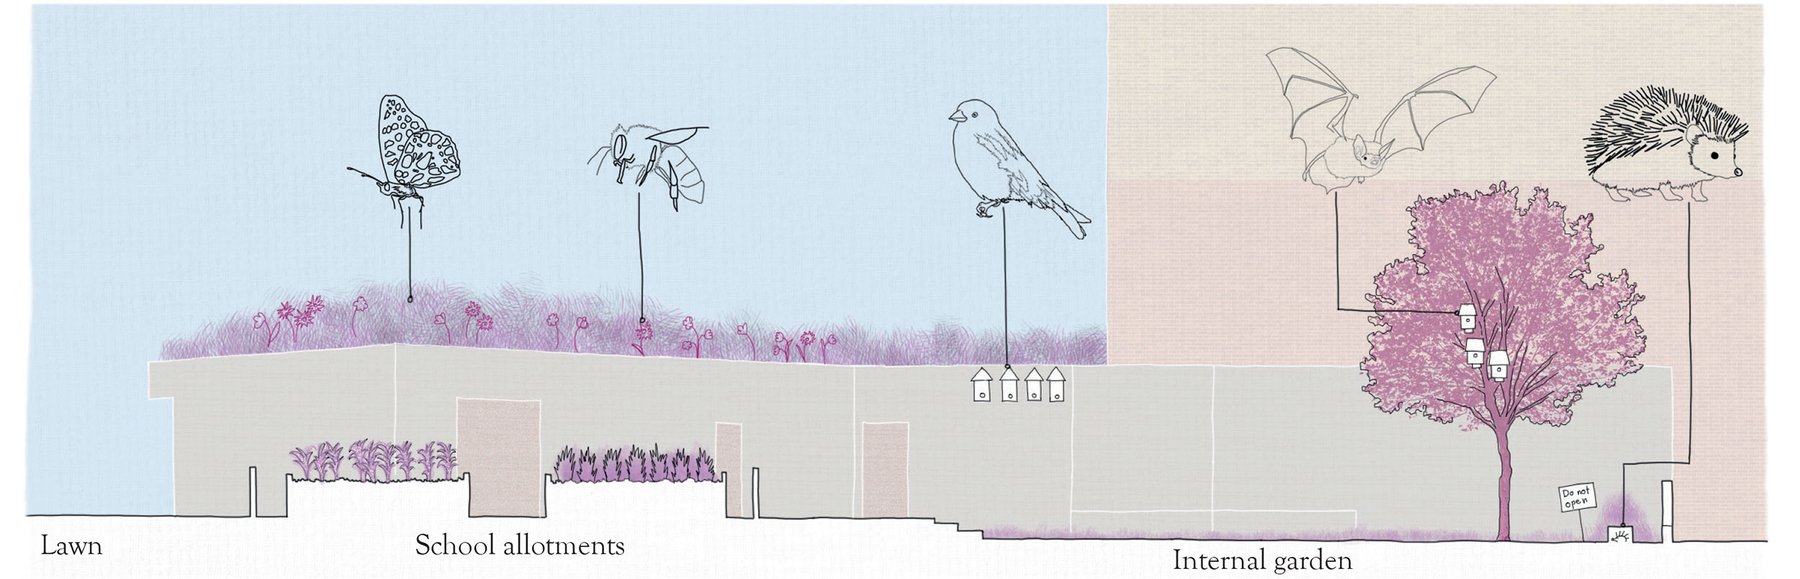 Building elevation showing habitat boxes for wildlife.jpg